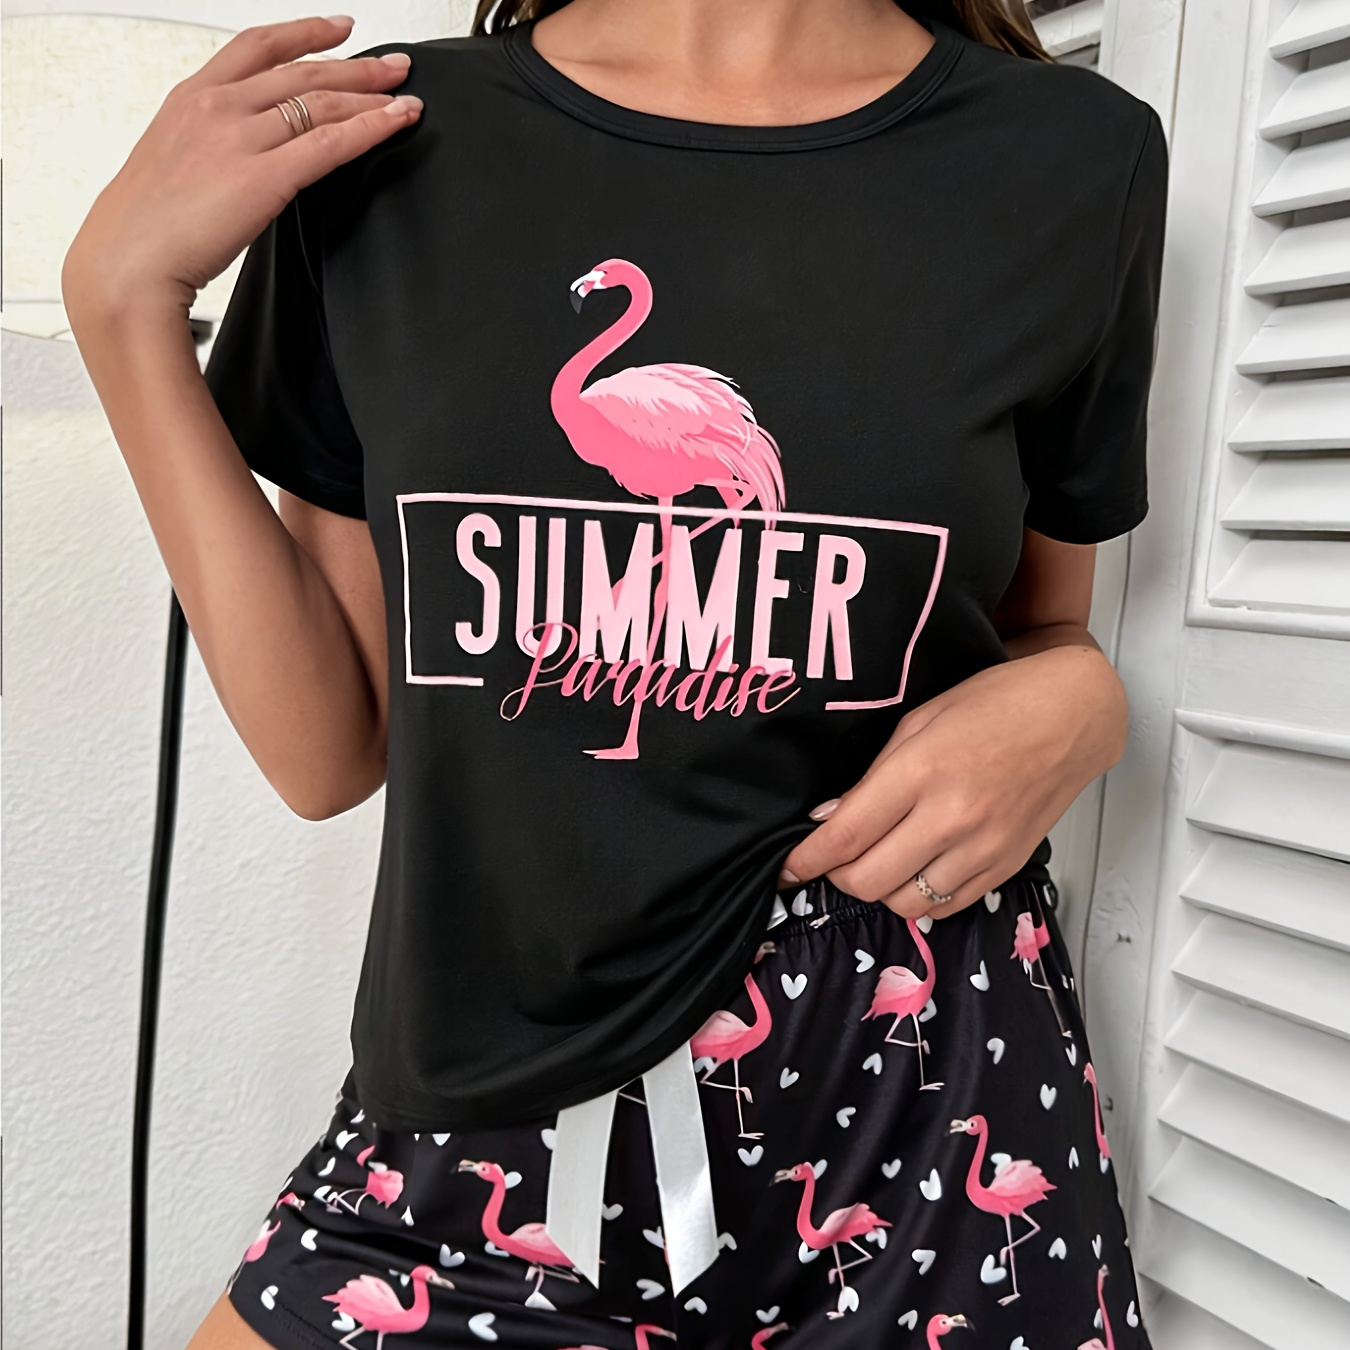 

Flamingo & Letter Print Pajama Set, Casual Short Sleeve Round Neck Top & Bow Shorts, Women's Sleepwear